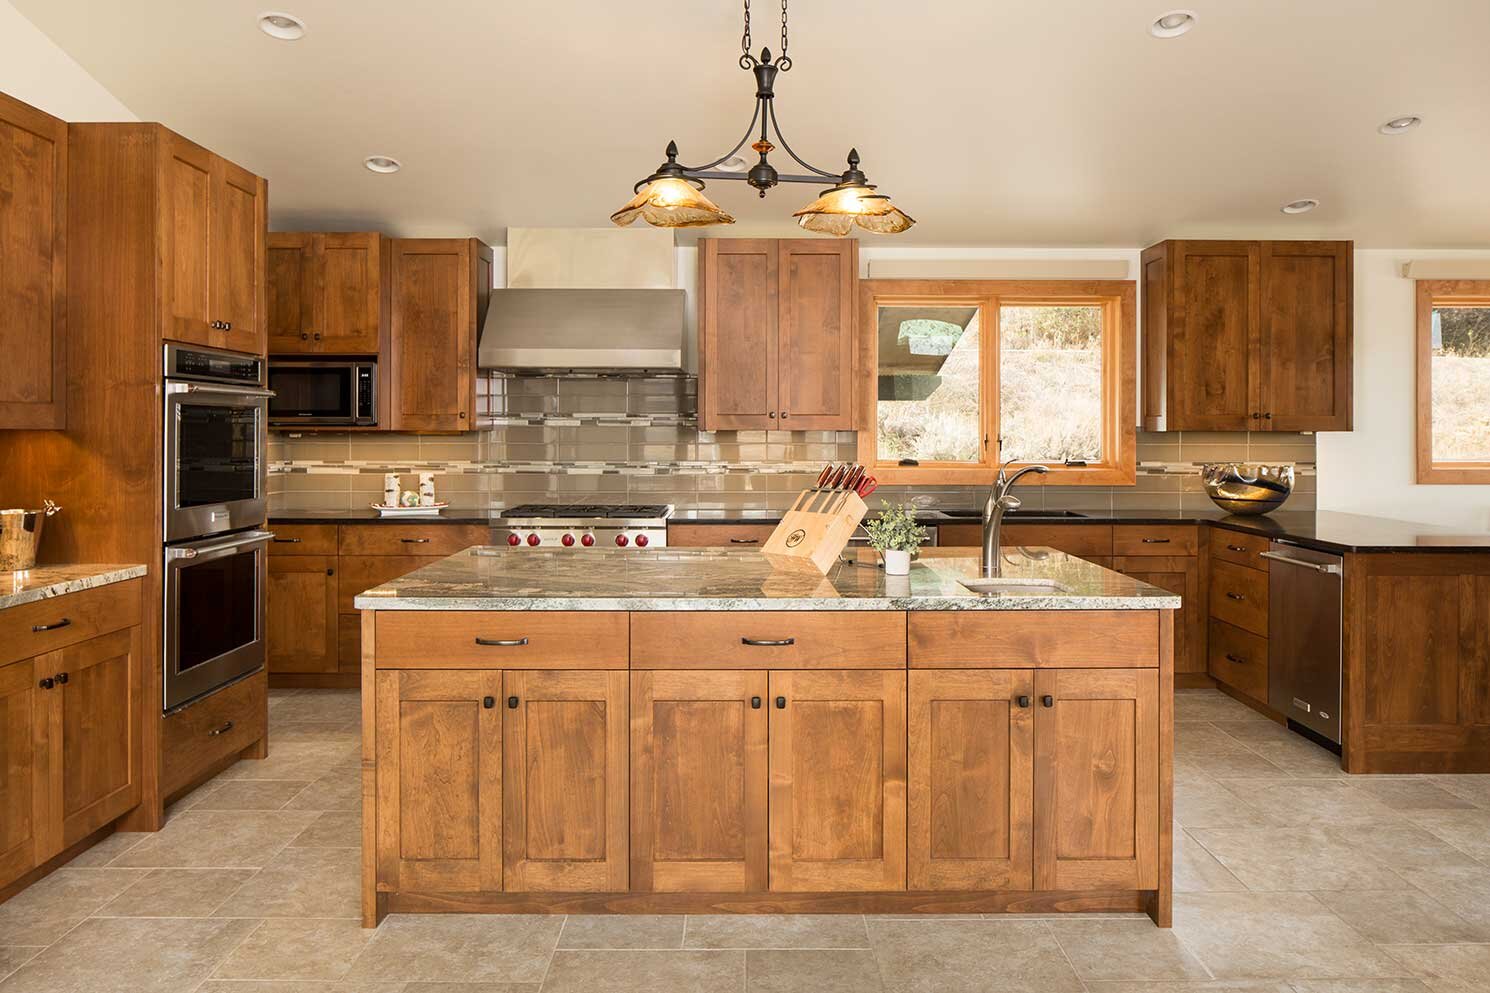 Kitchen with alder wood cabinets